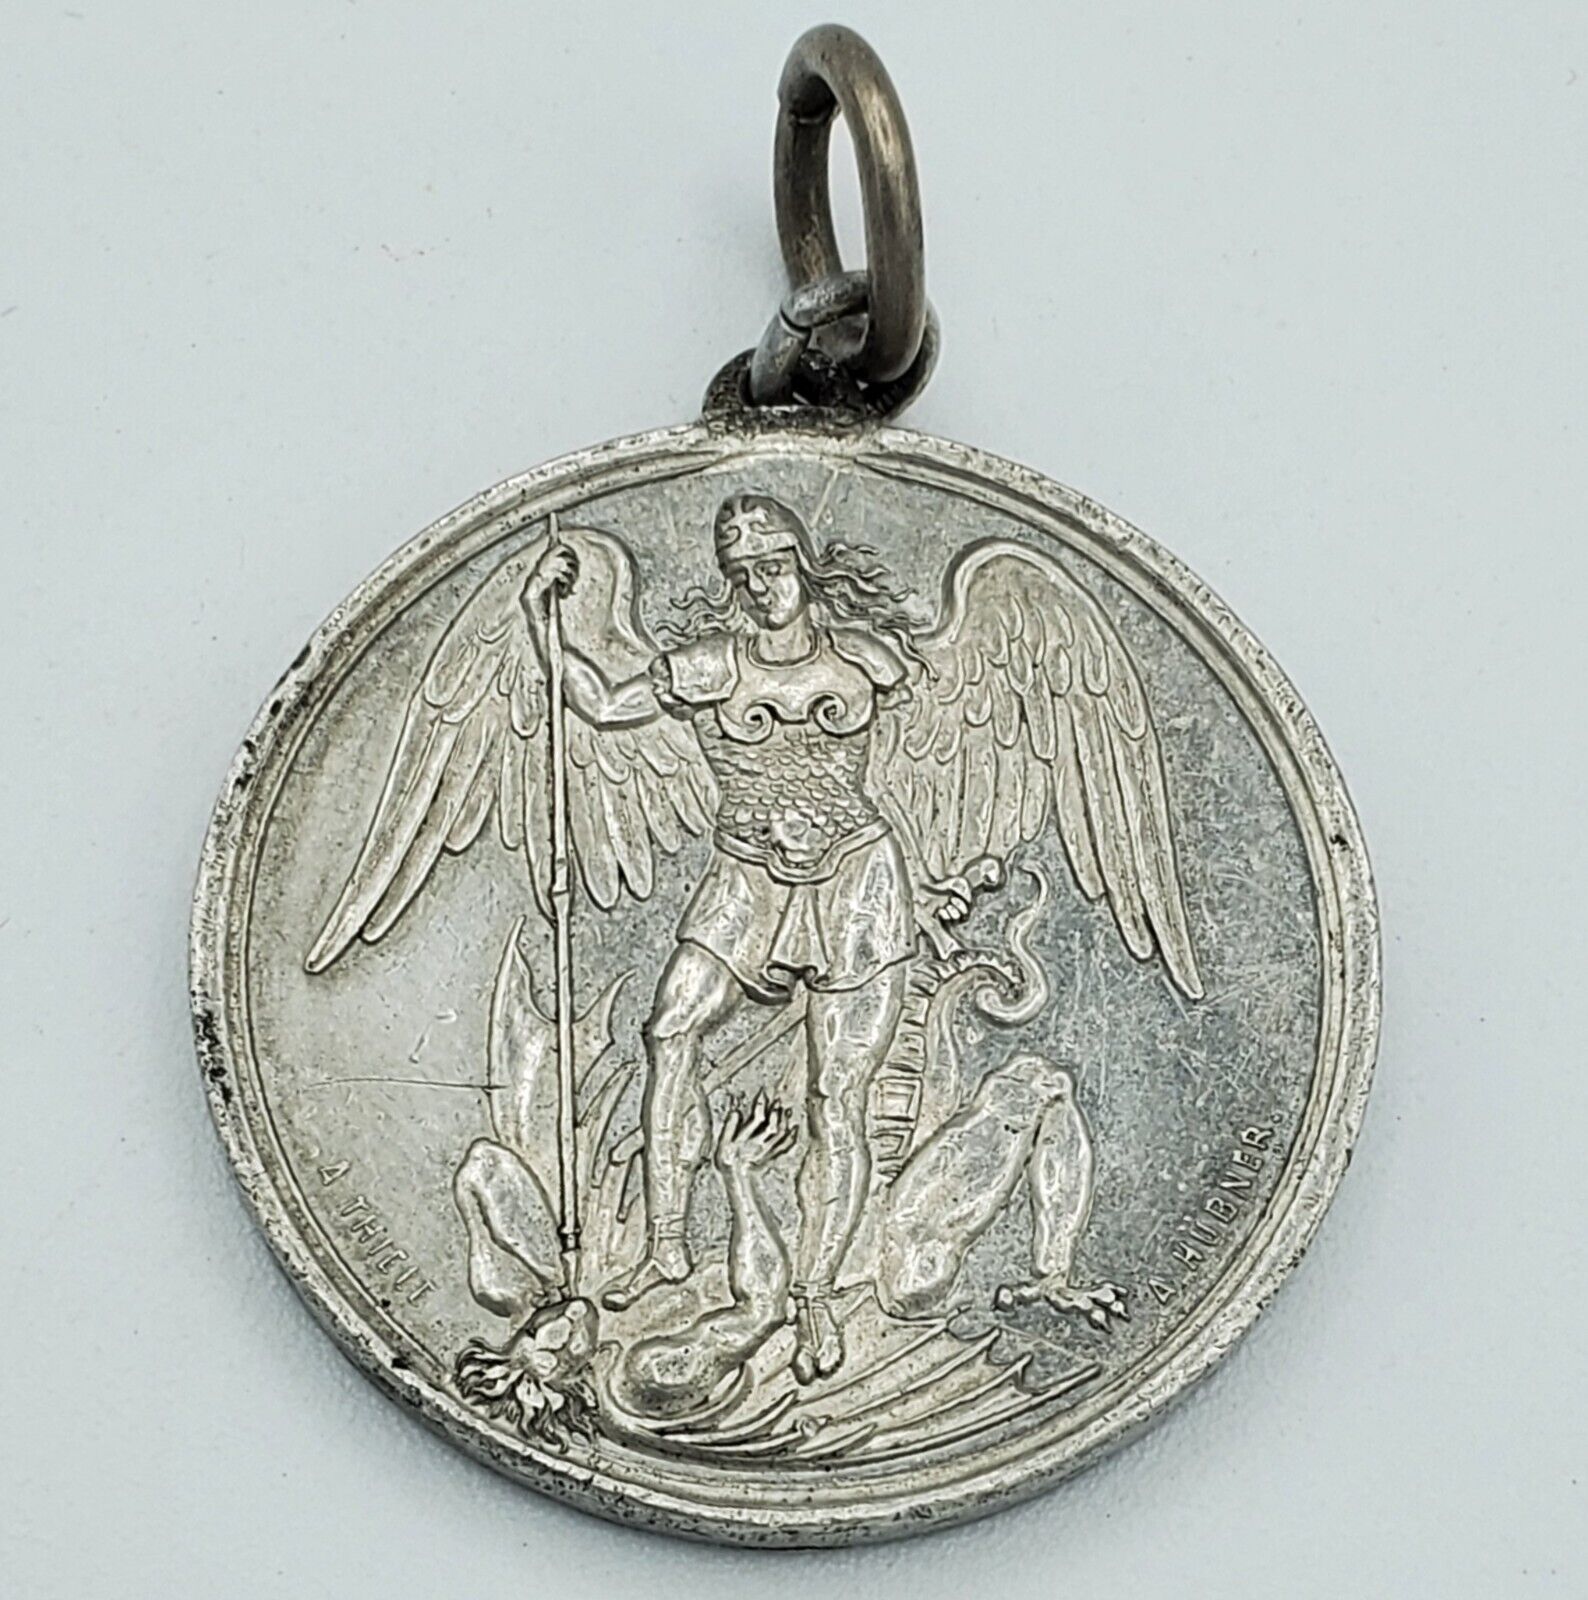 German French Wars Sedan 1870 medal Napoleon capture Victory Prussia original